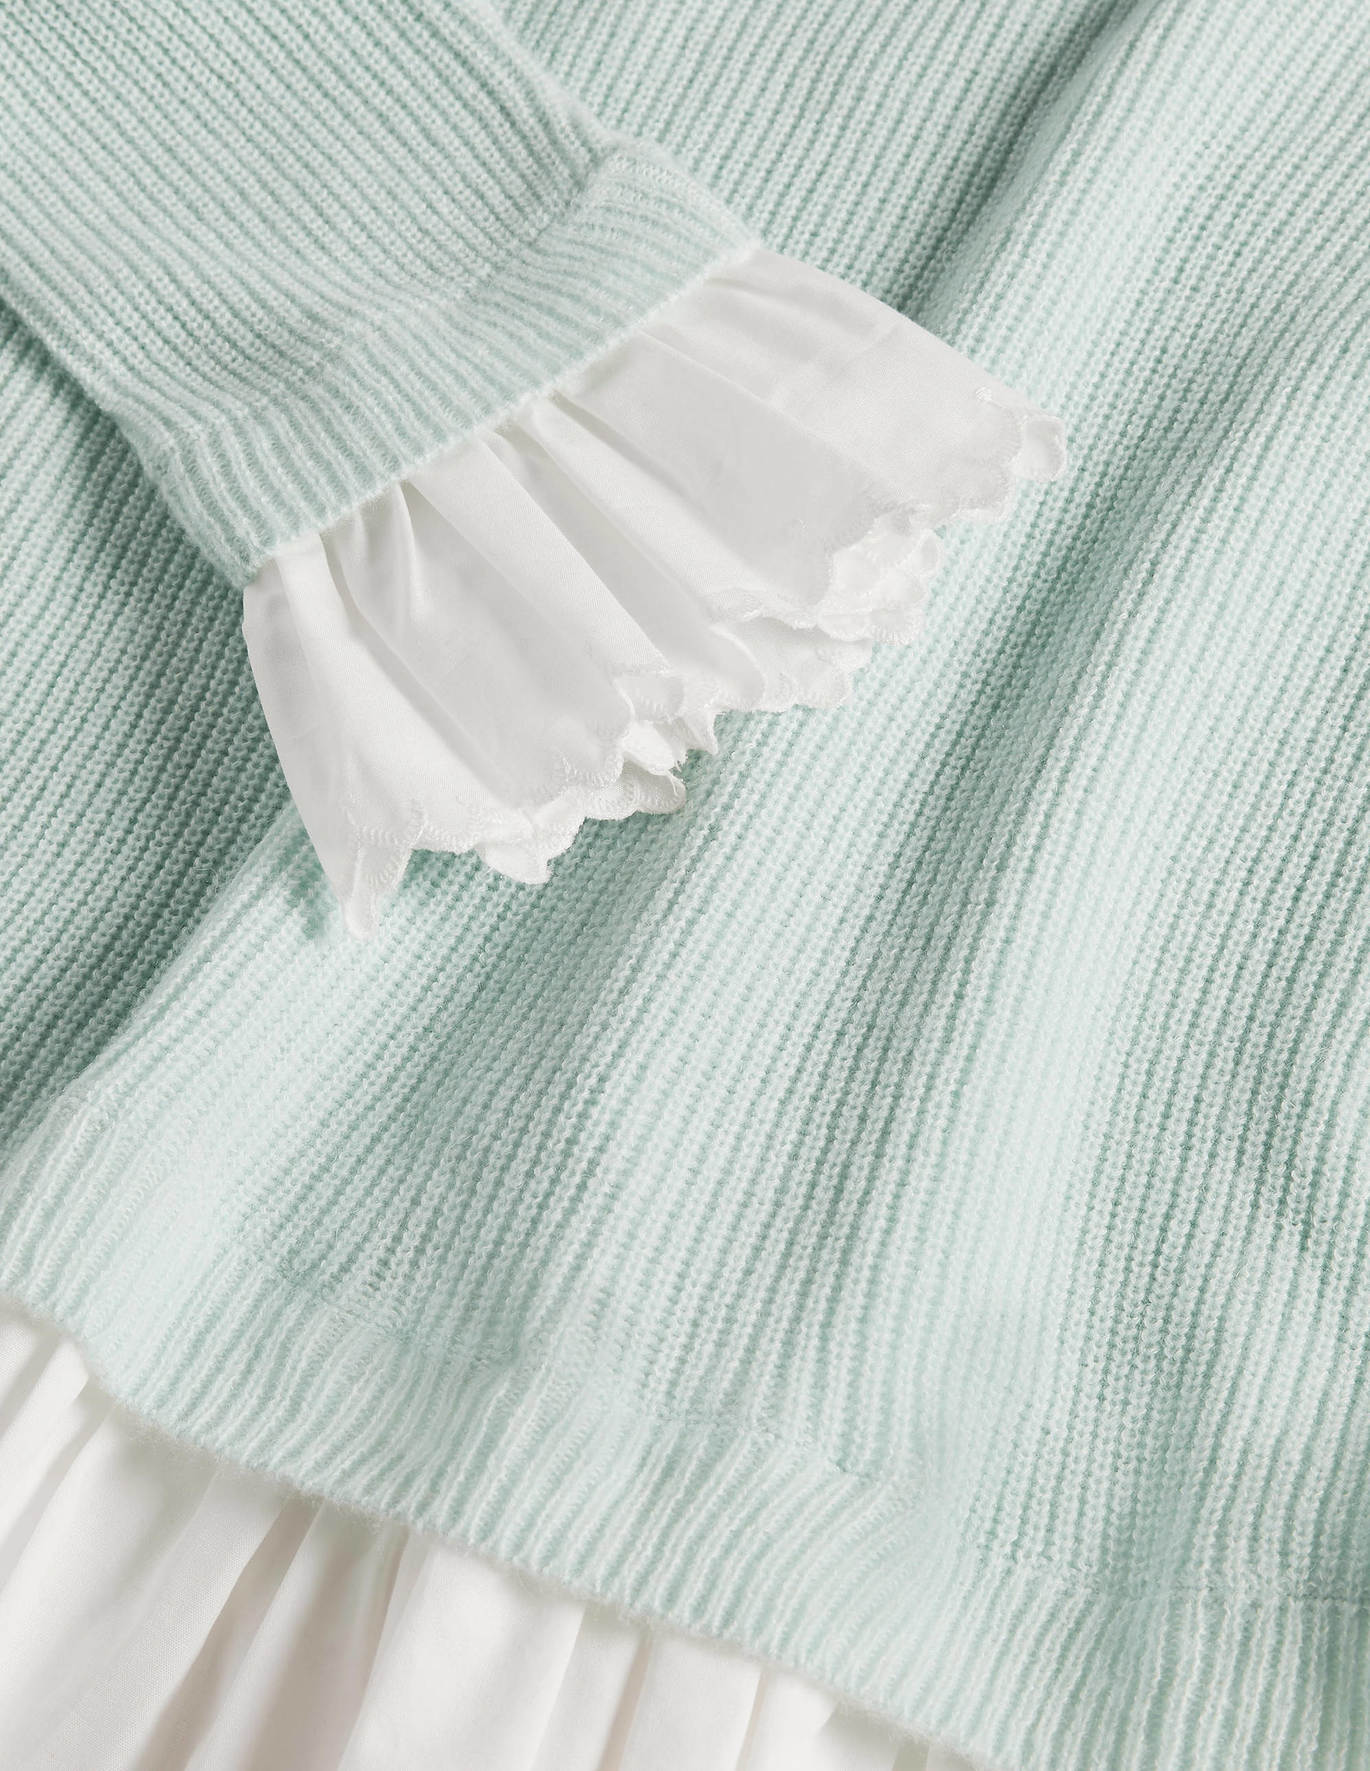 Boden Long Sleeve Catherine Sweater - /Green Multi - 14